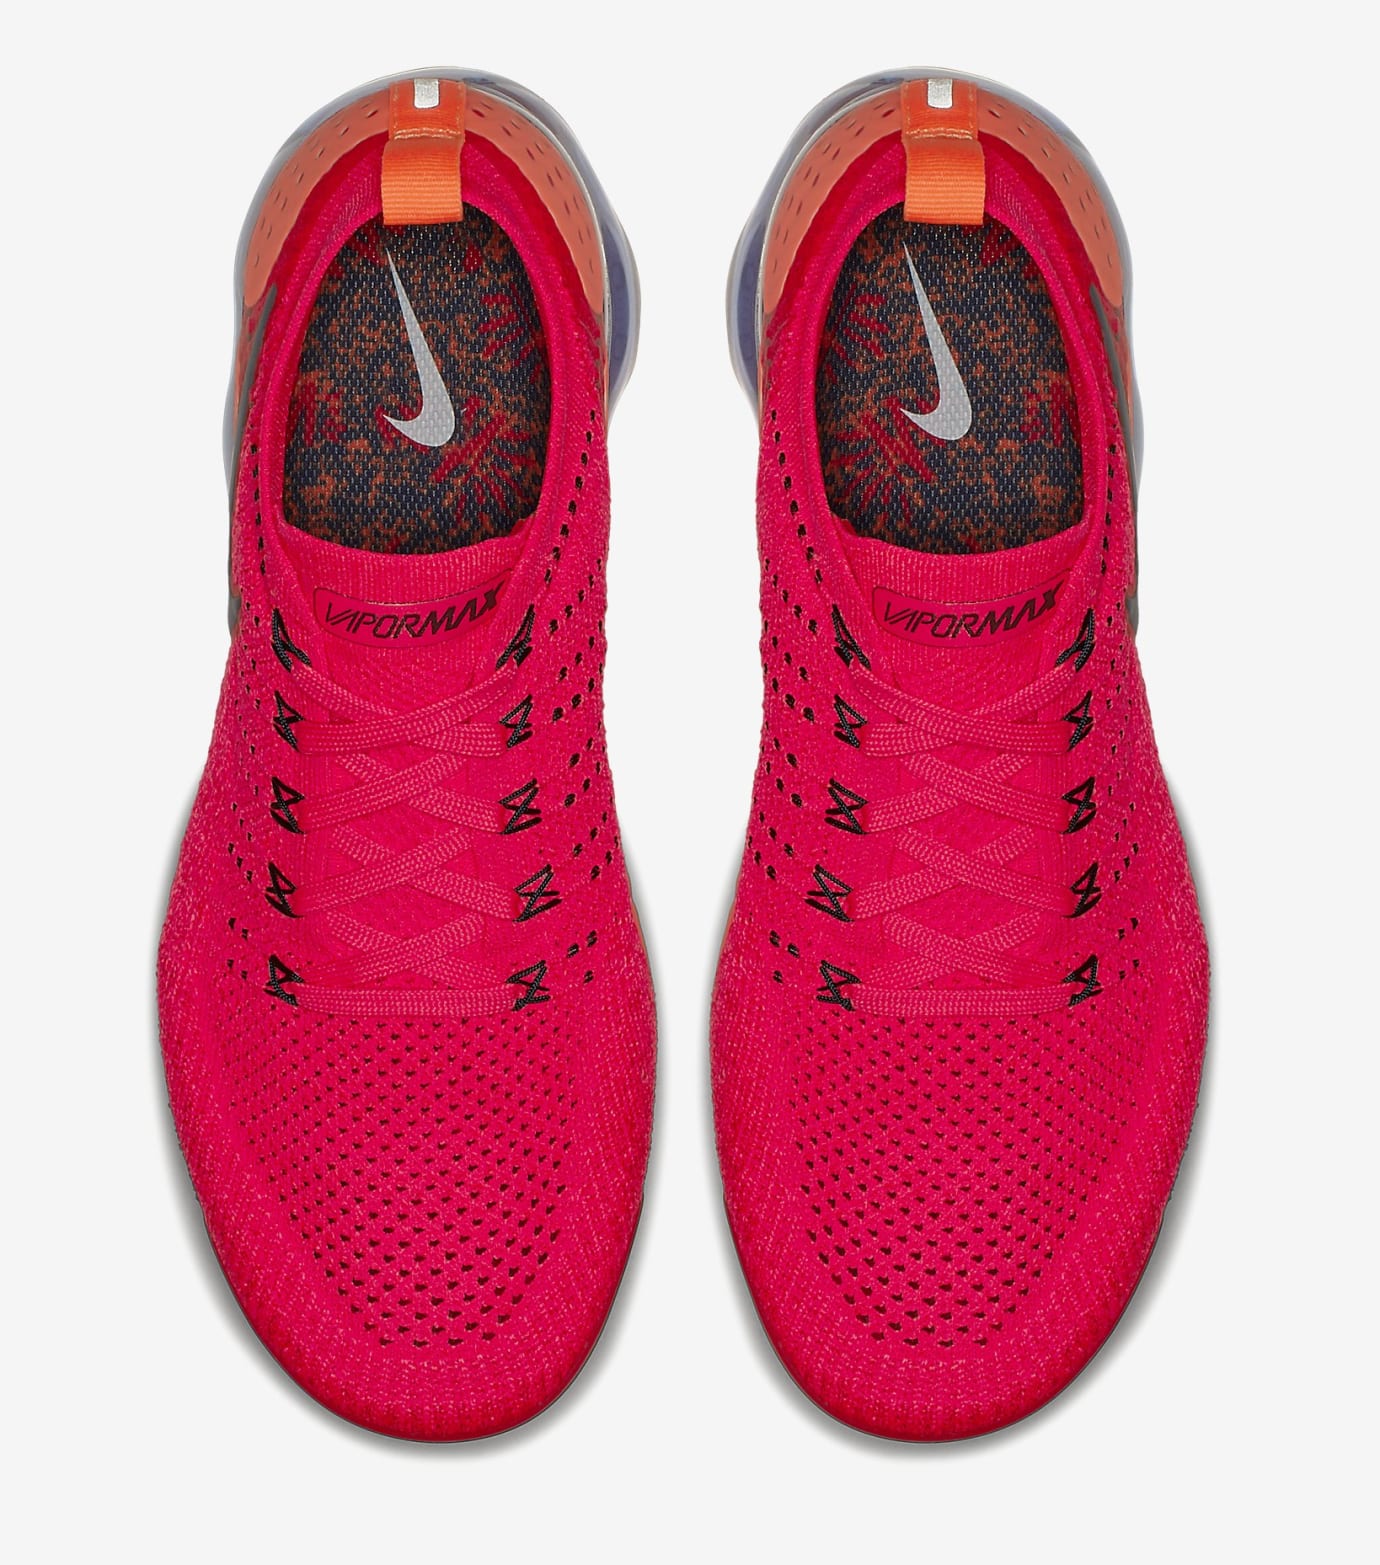 Nike Air VaporMax 2 'Red Orbit' July 19, 2018 Release Date AR5406 